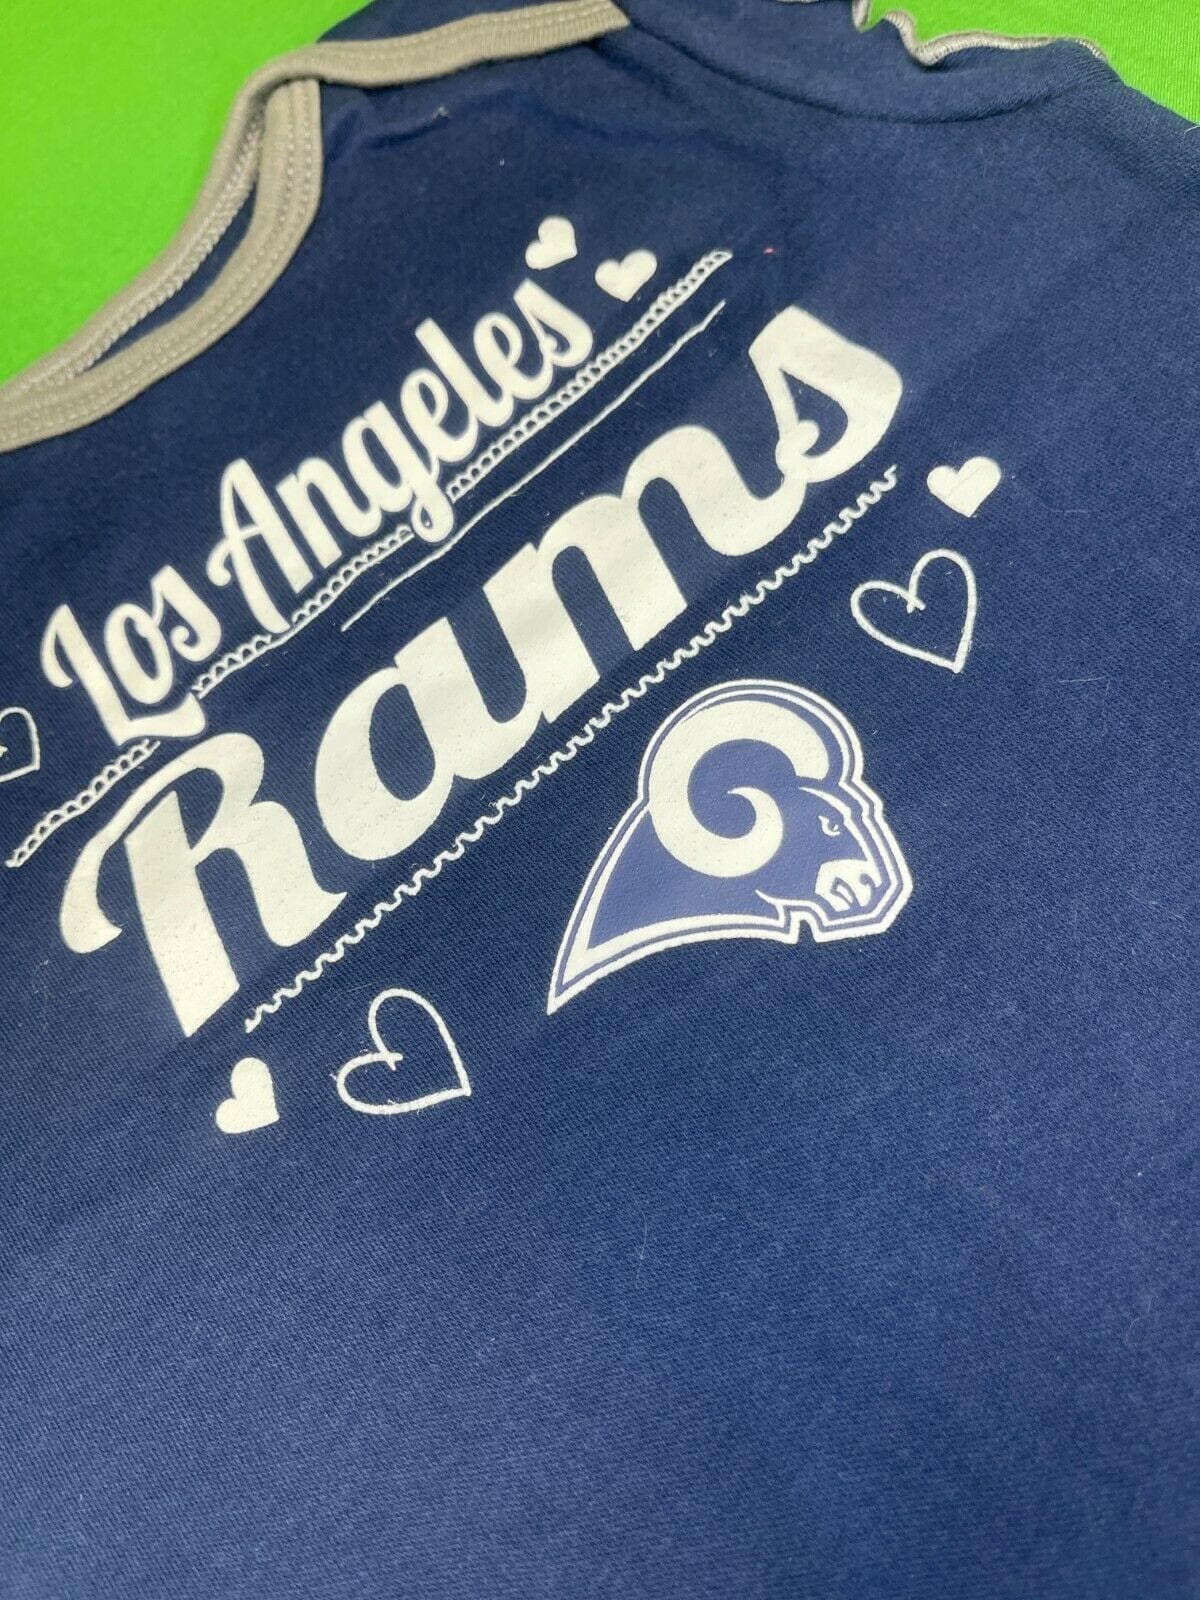 NFL Los Angeles Rams Blue Bodysuit/Vest Girls' 18 months